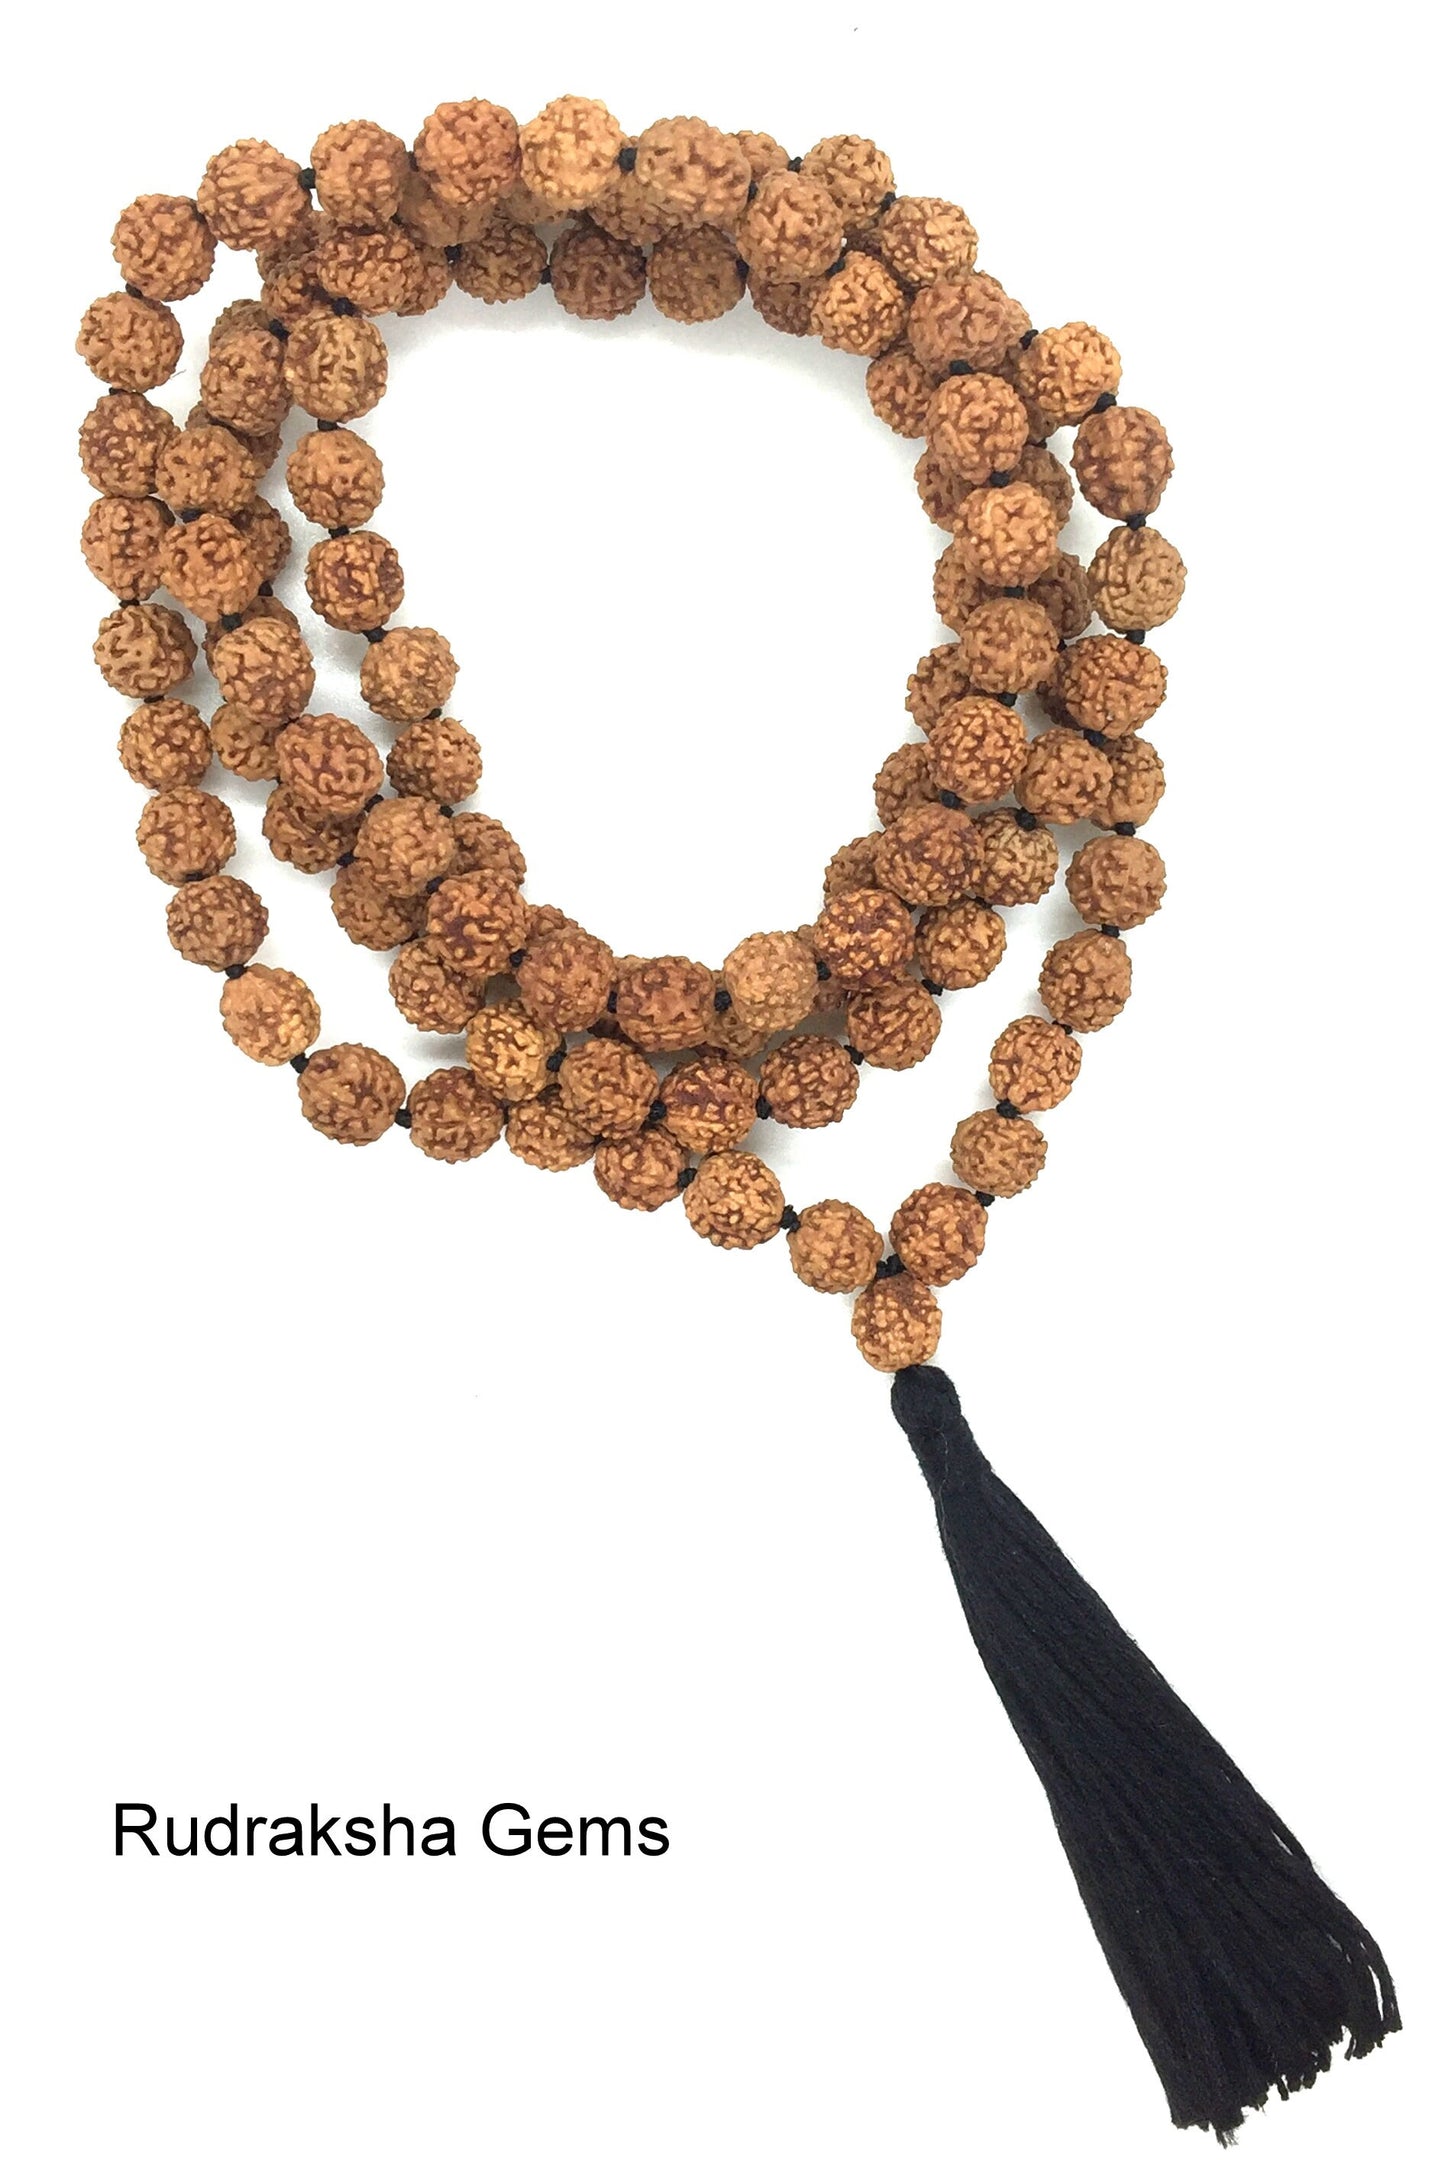 Lord Shiva Rudraksha Japa Mala 108 beads traditional style hand knotted mala purified & blessed - Long Black Tassel /  Knots - Tassel Mala